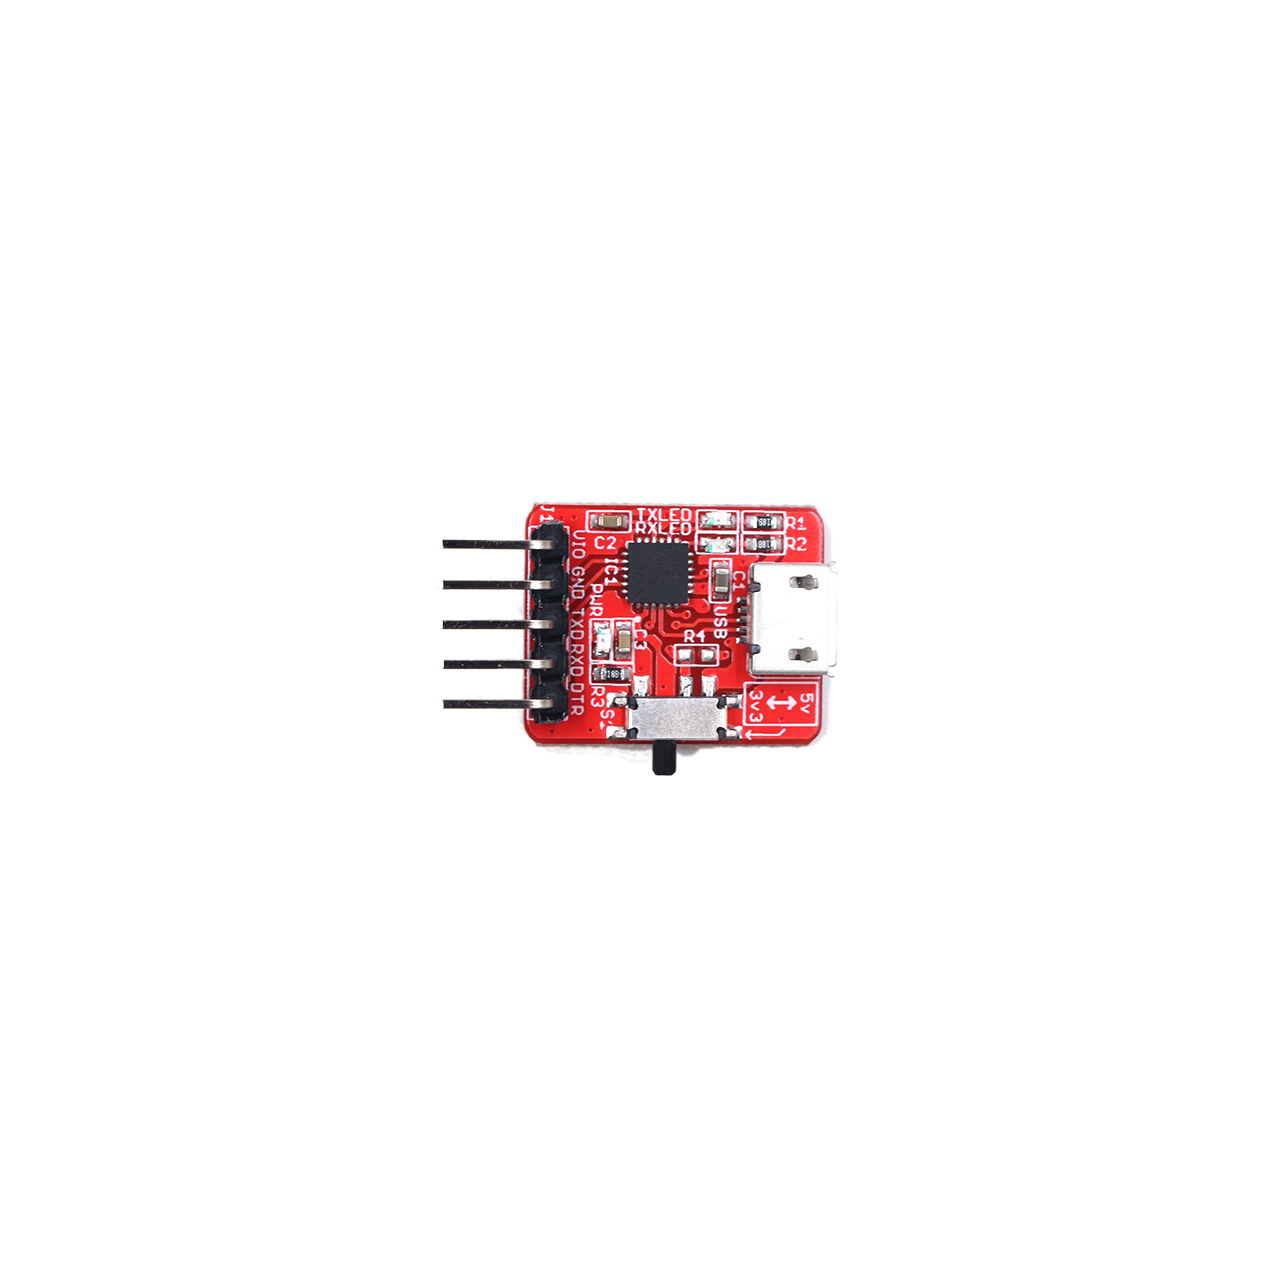 CP2104 USB to Serial Bridge (Arduino Programmer)